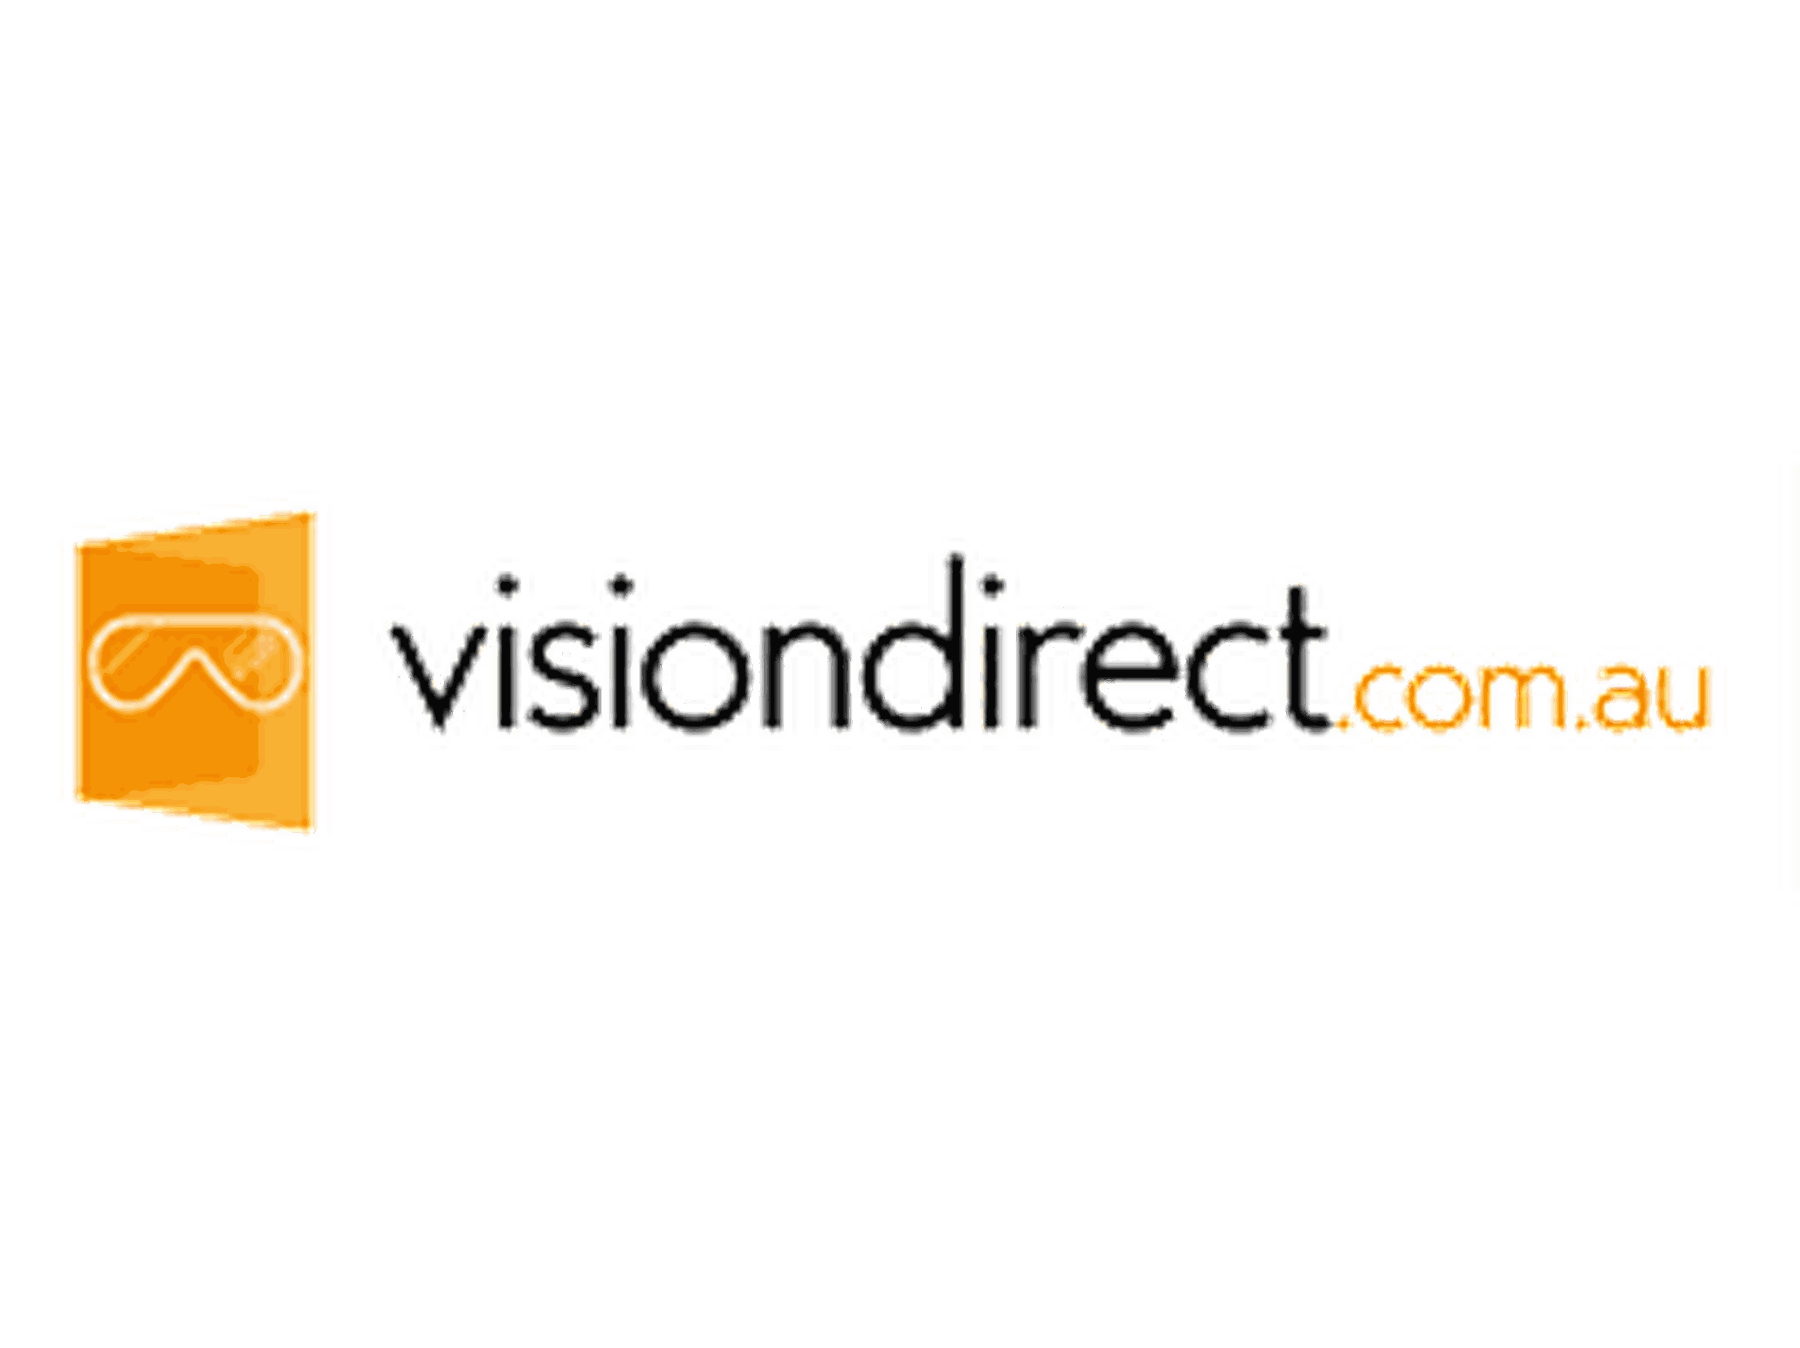 Vision Direct